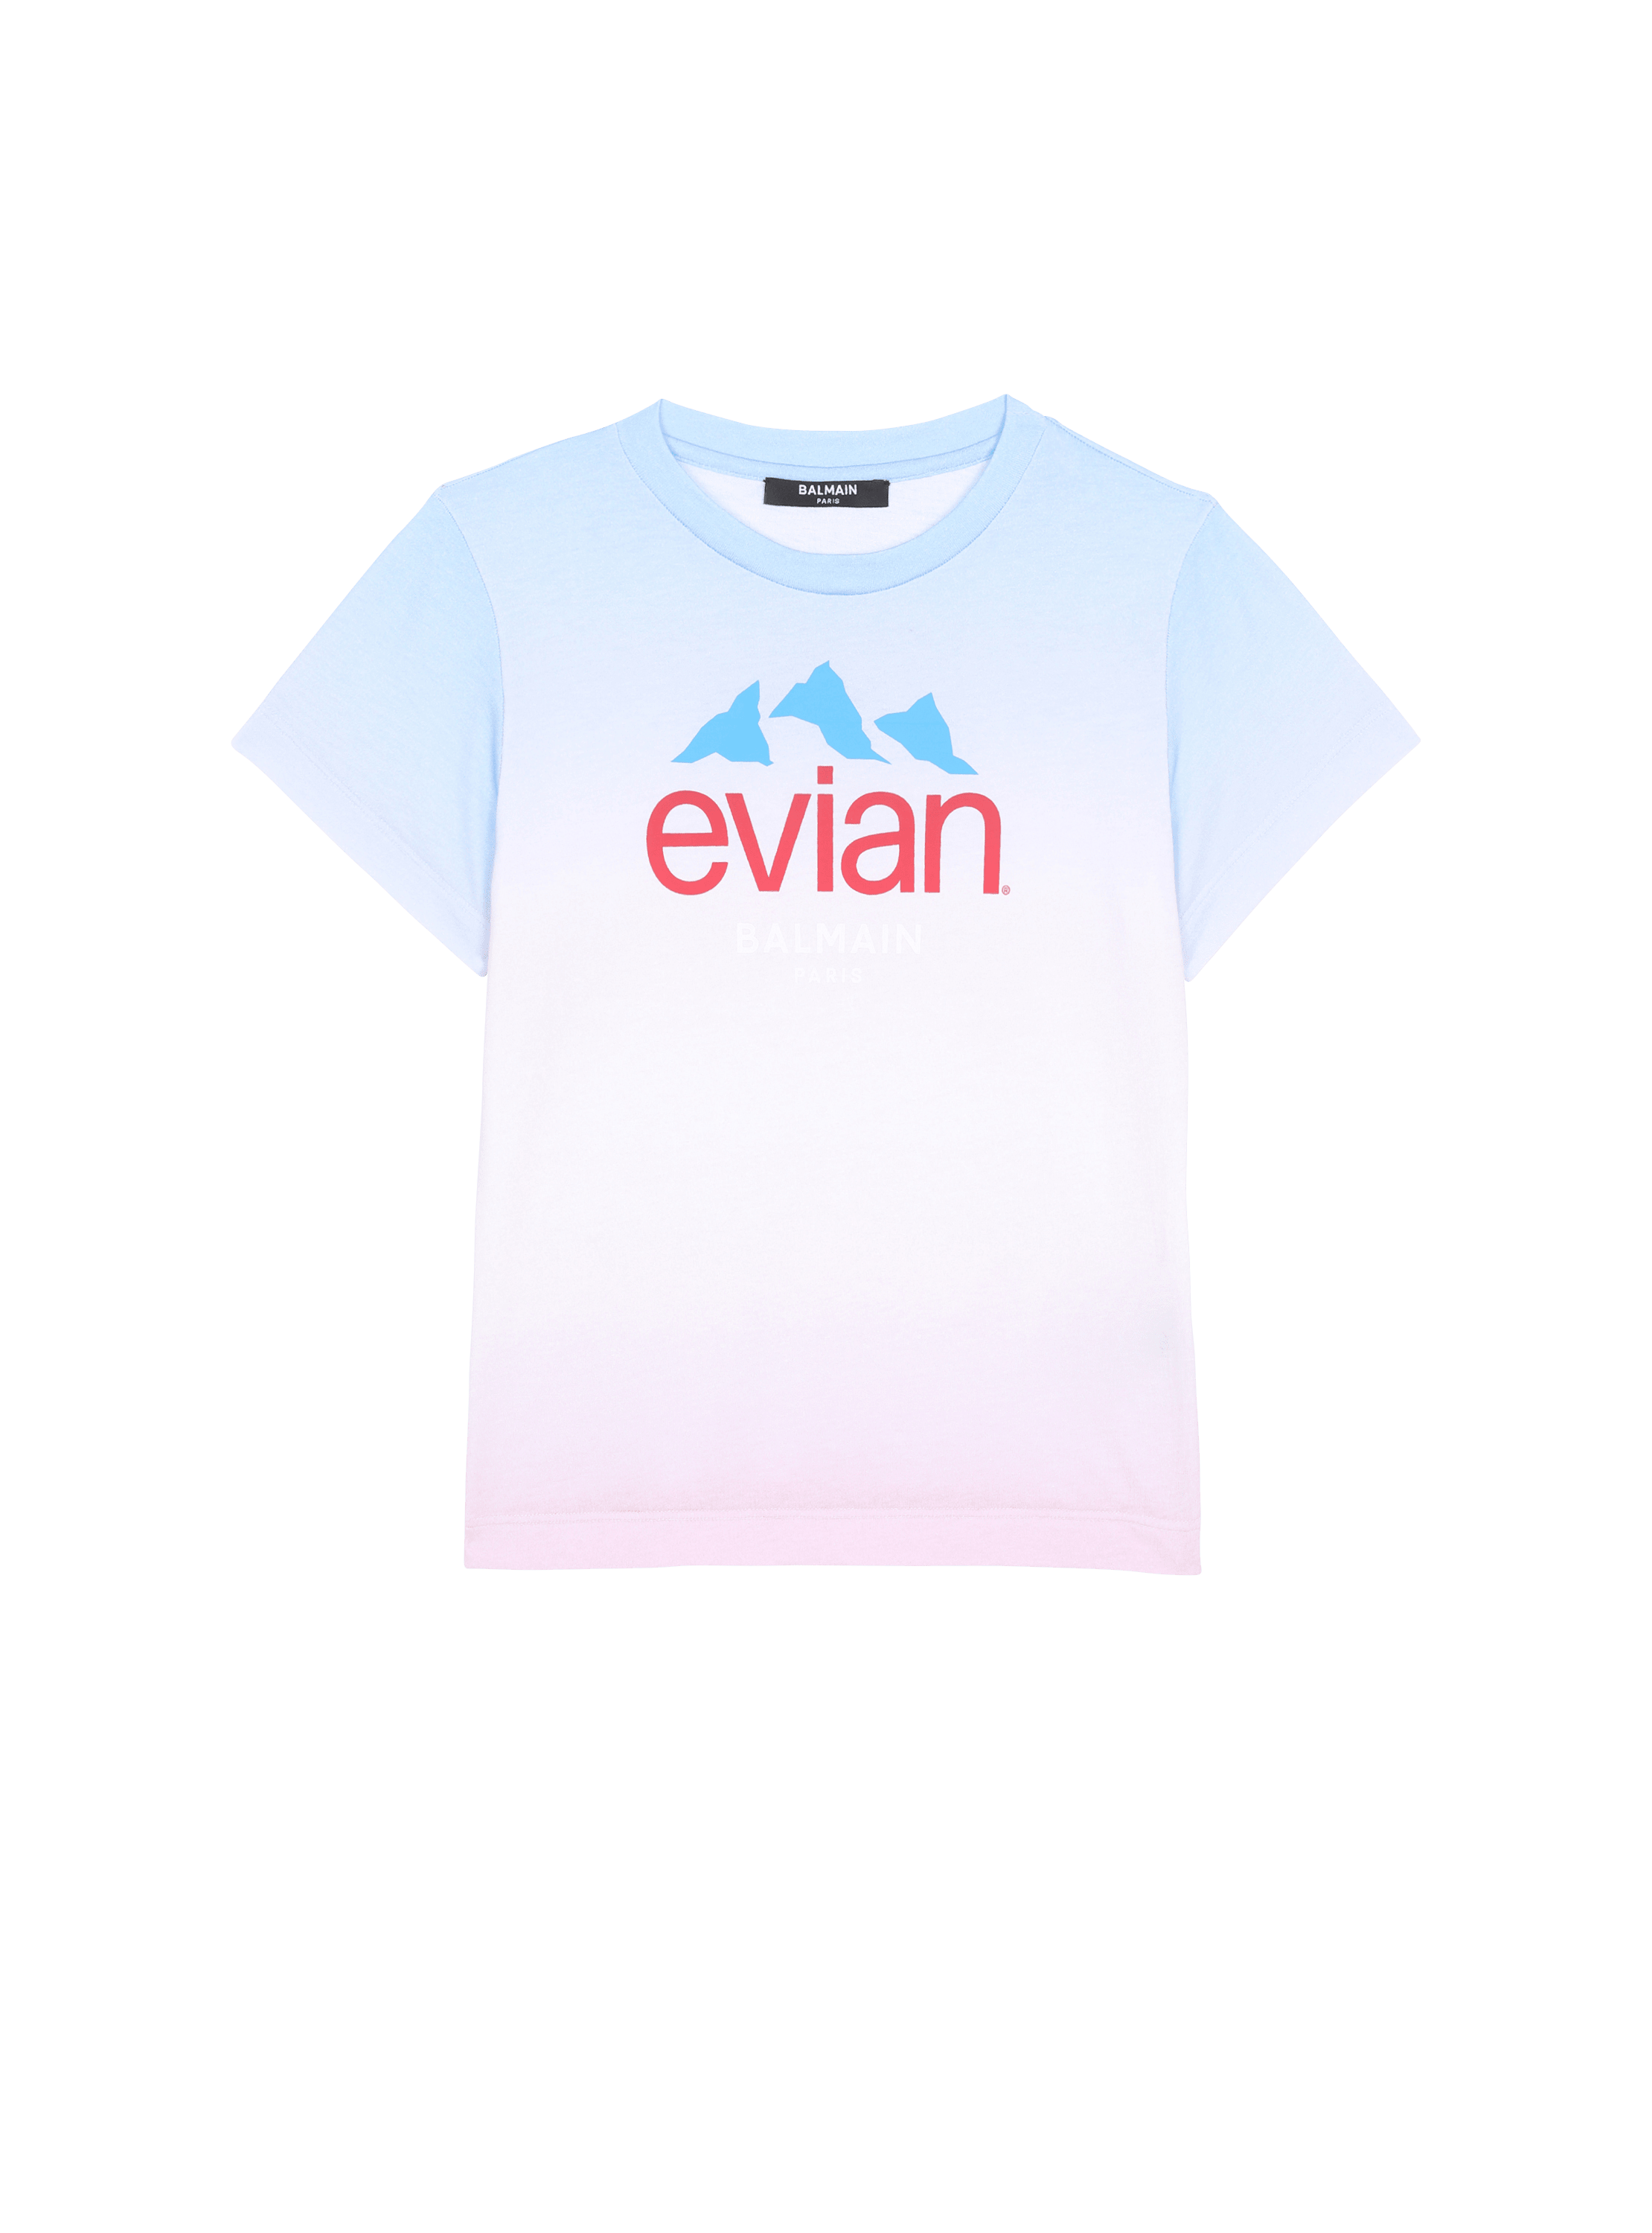 Balmain x Evian - T-Shirt mit Farbverlauf